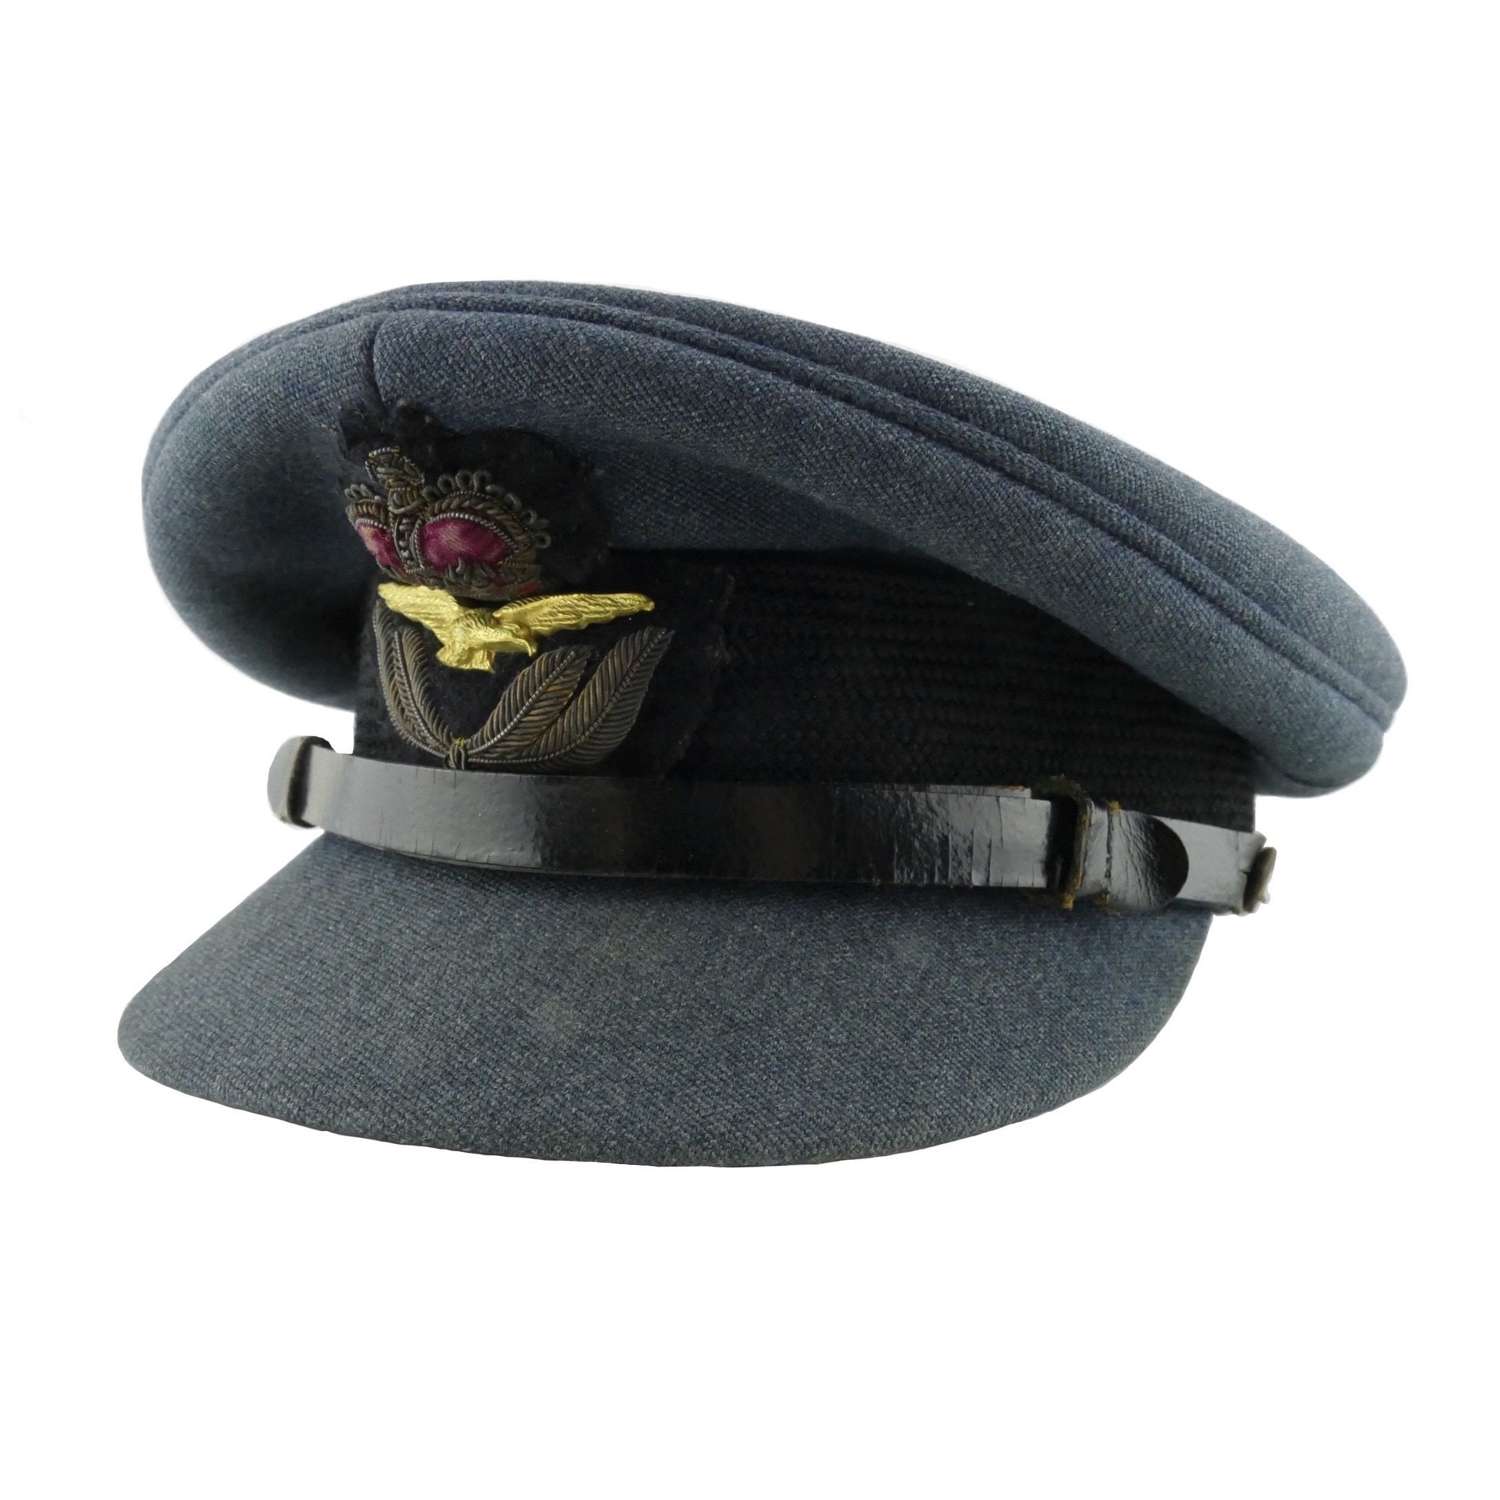 RAF officer rank service dress cap, post ww2